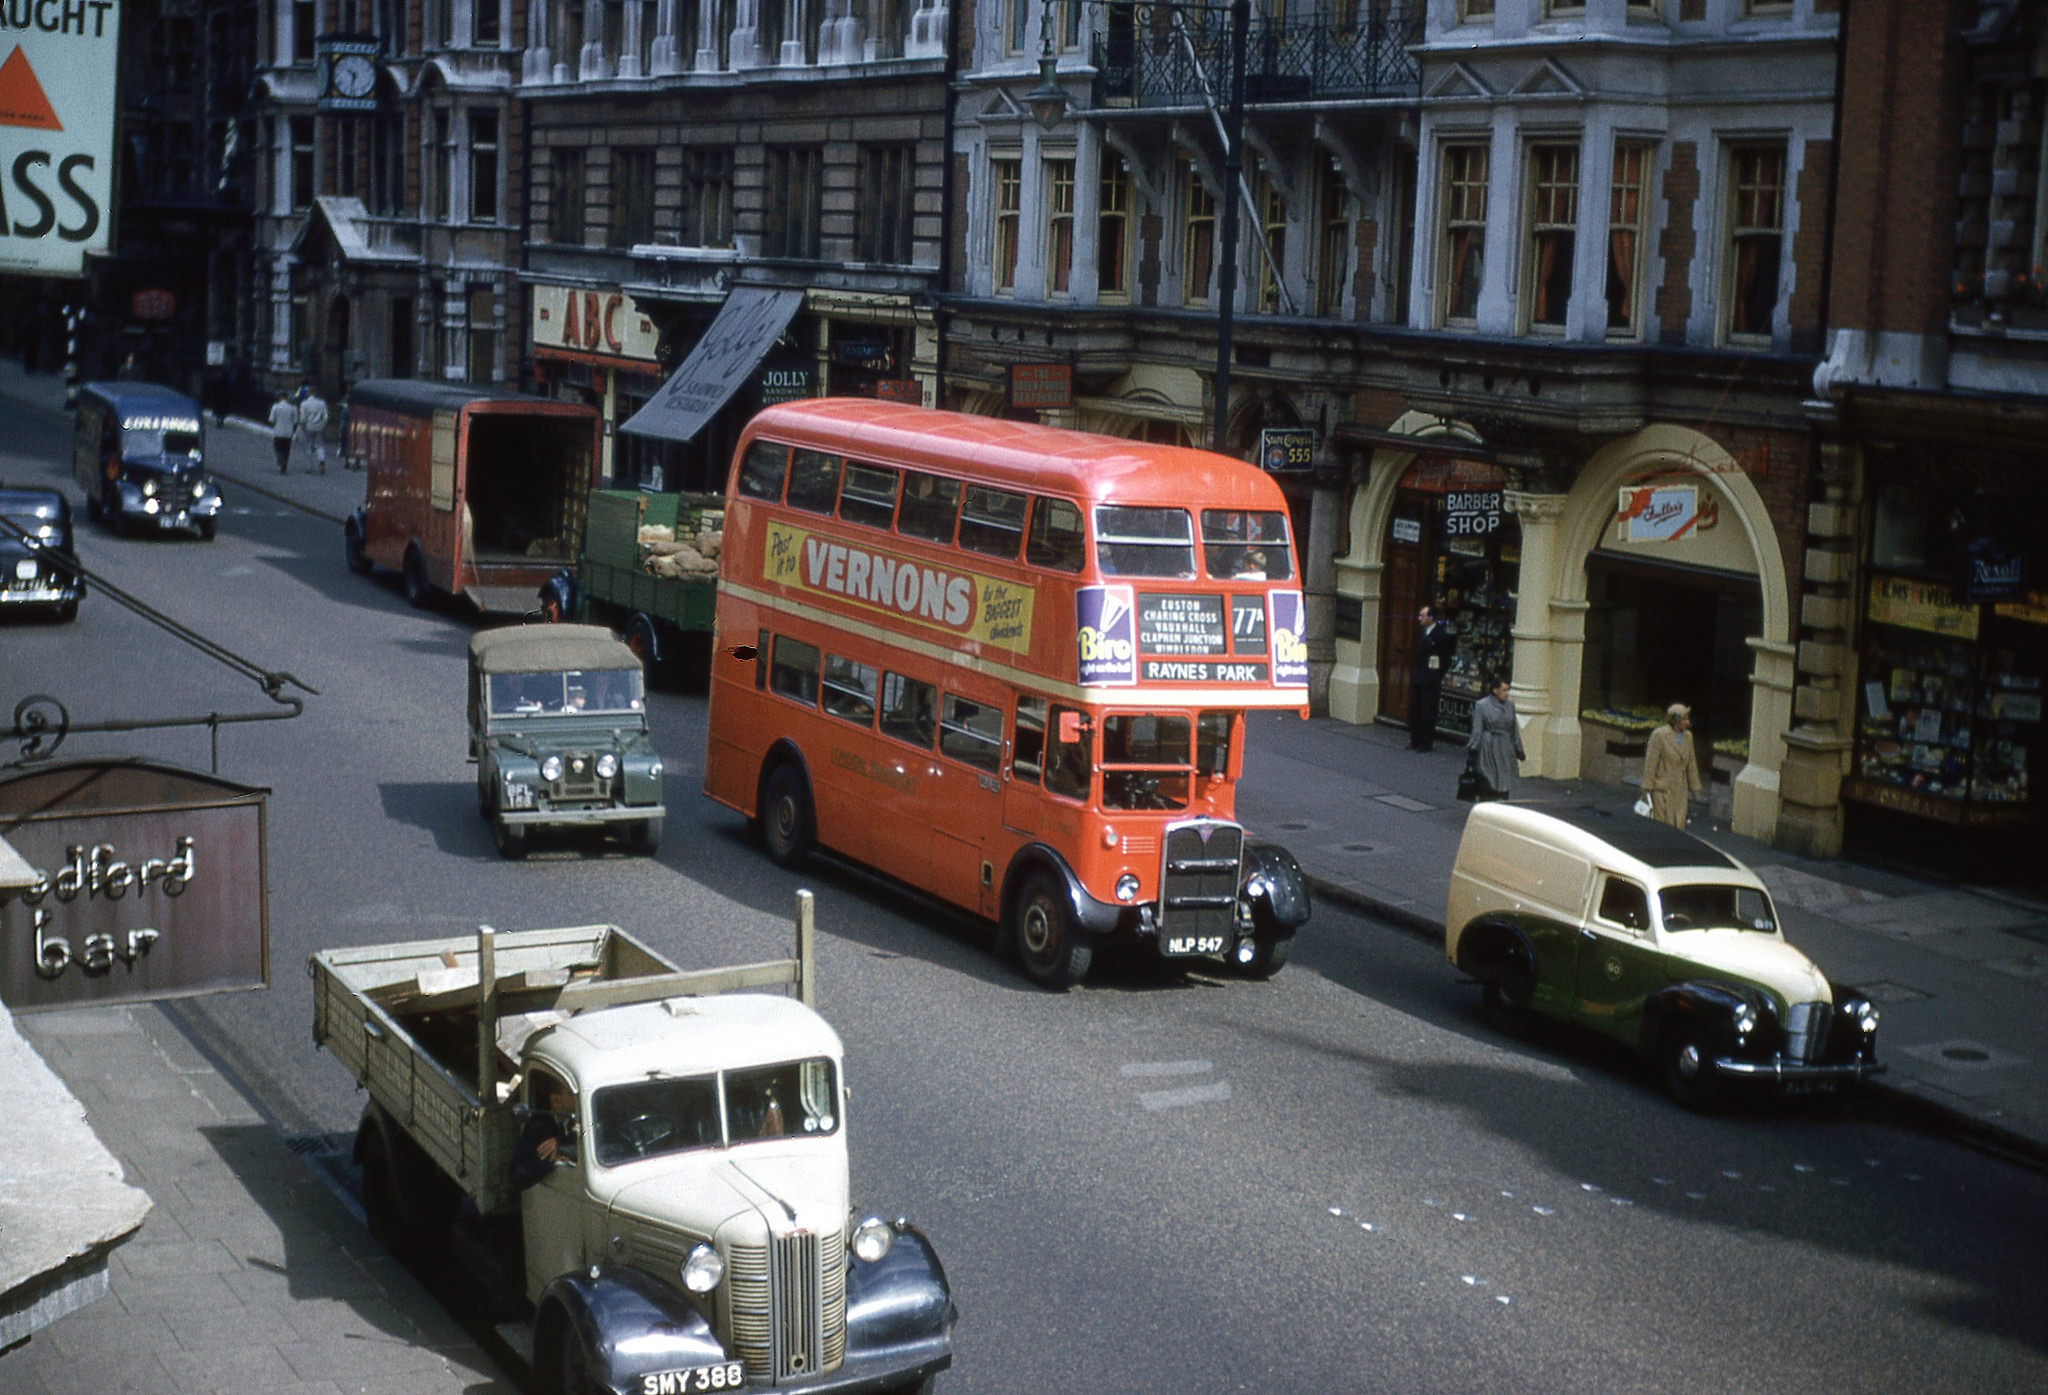 Лондон 1950